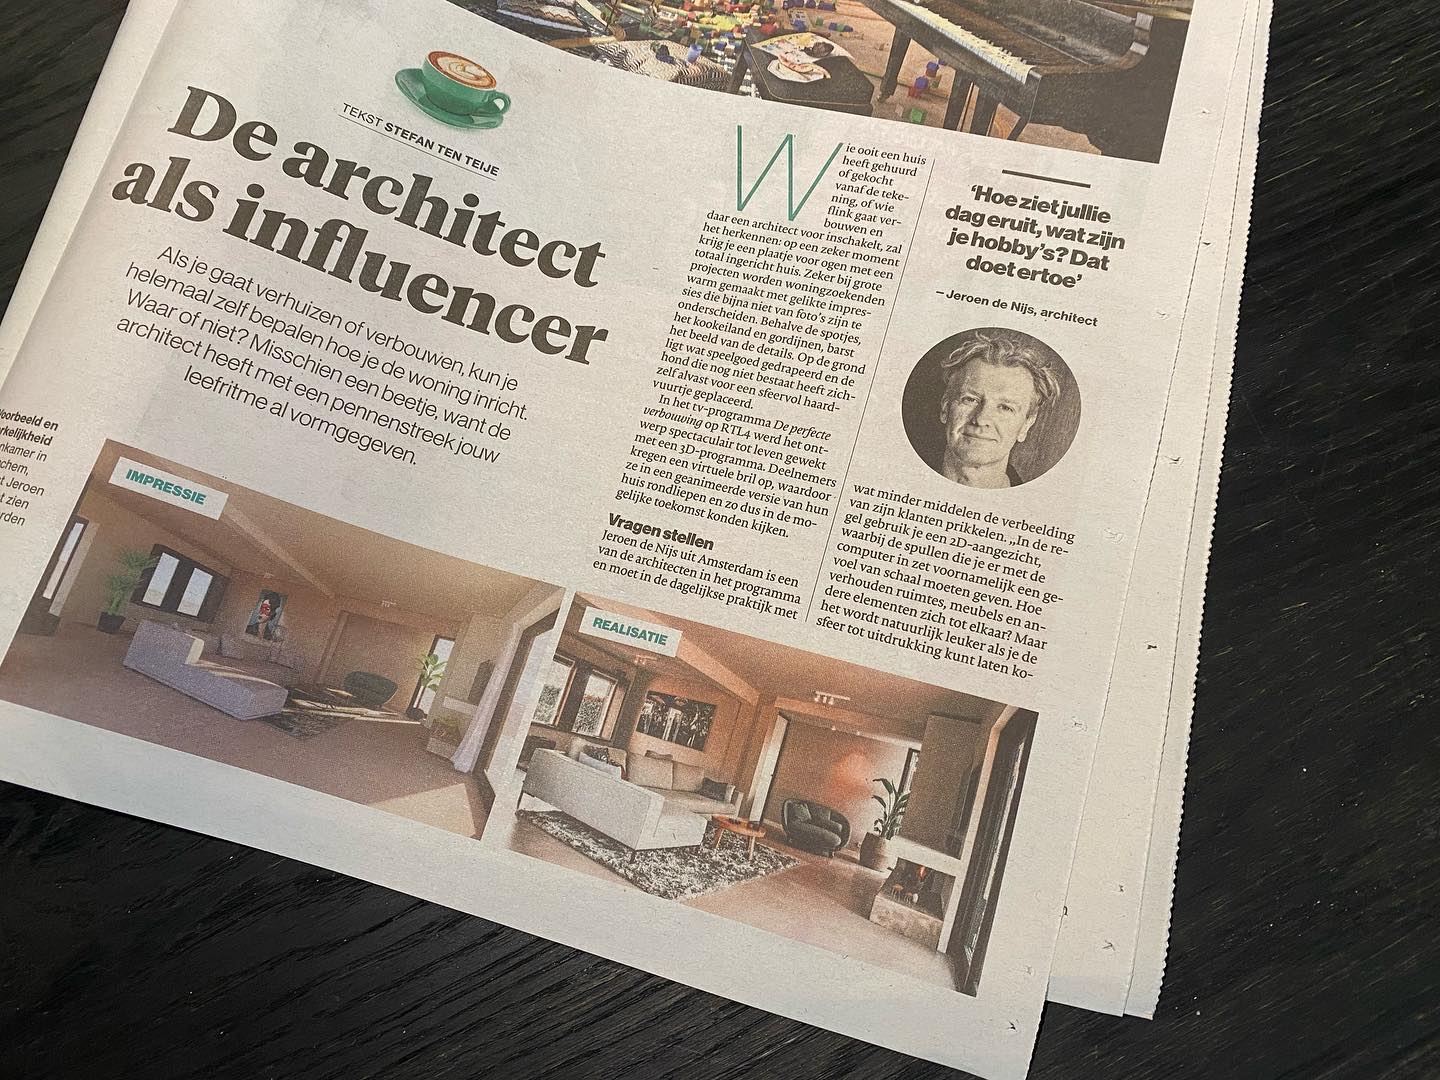 What's new? • Jeroen de Nijs architect • interior • bni